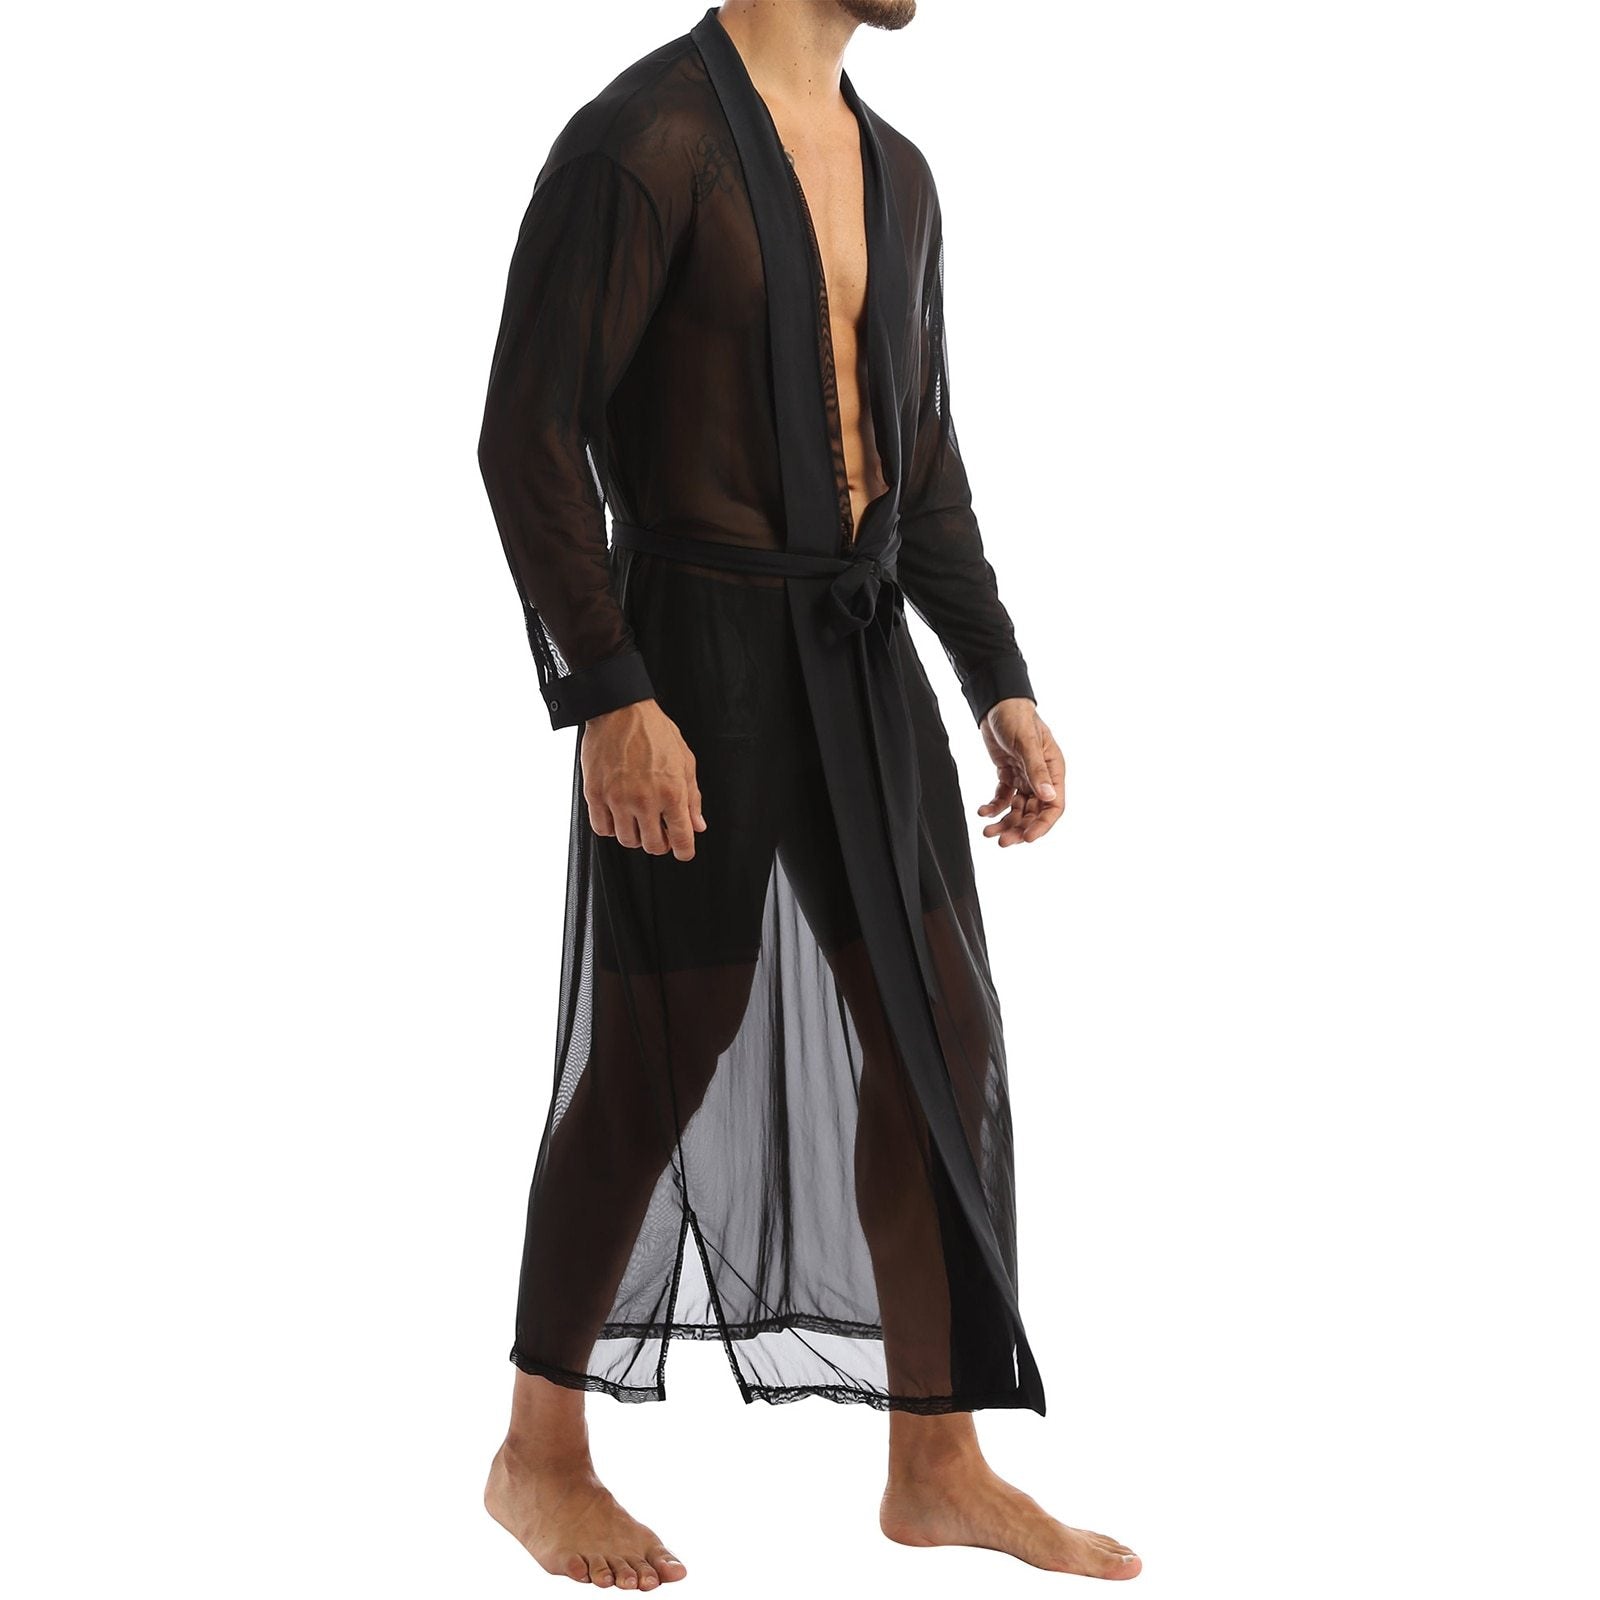 Mens Transparent Sheer Mesh Long Robe, Sleepwear Male Lingerie